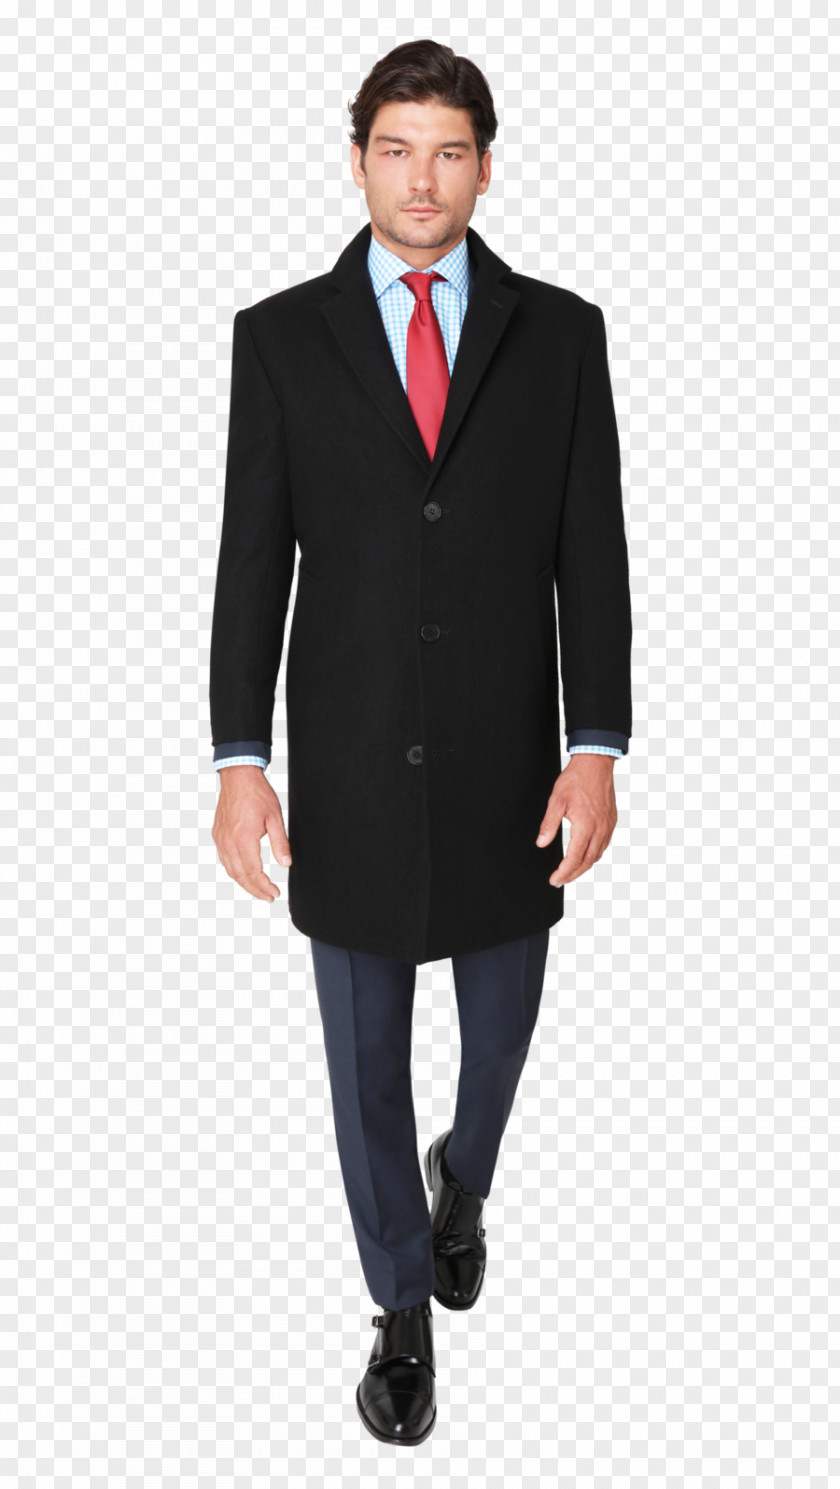 Suit Tuxedo Black Tie Clothing Jacket PNG